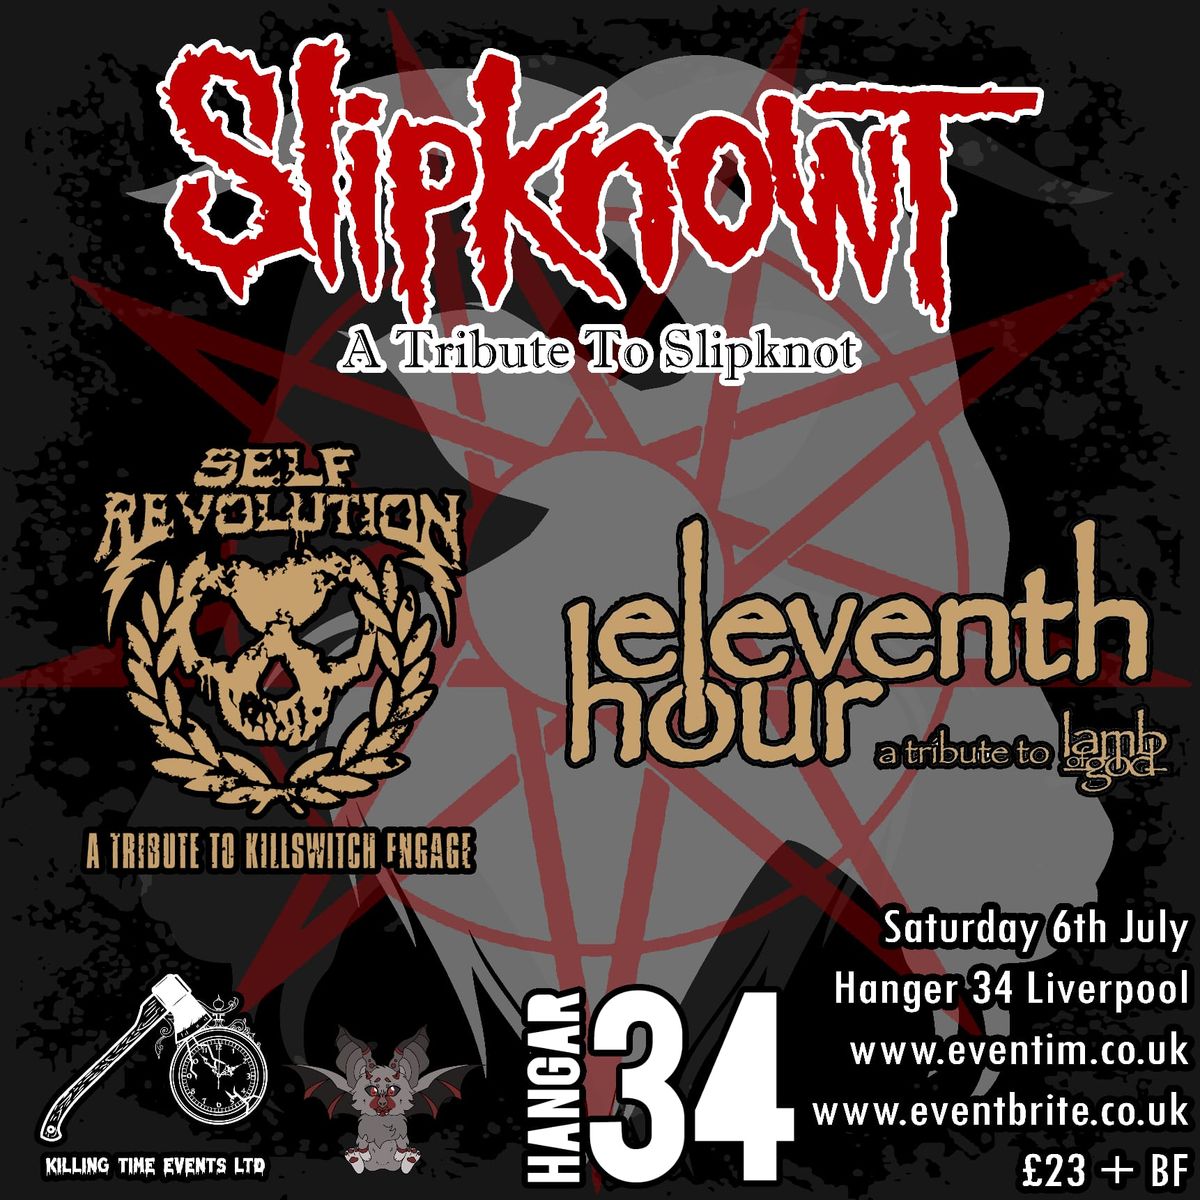 Slipknowt, Self Revolution, Eleventh Hour, Hanger 34 Liverpool, 6th July